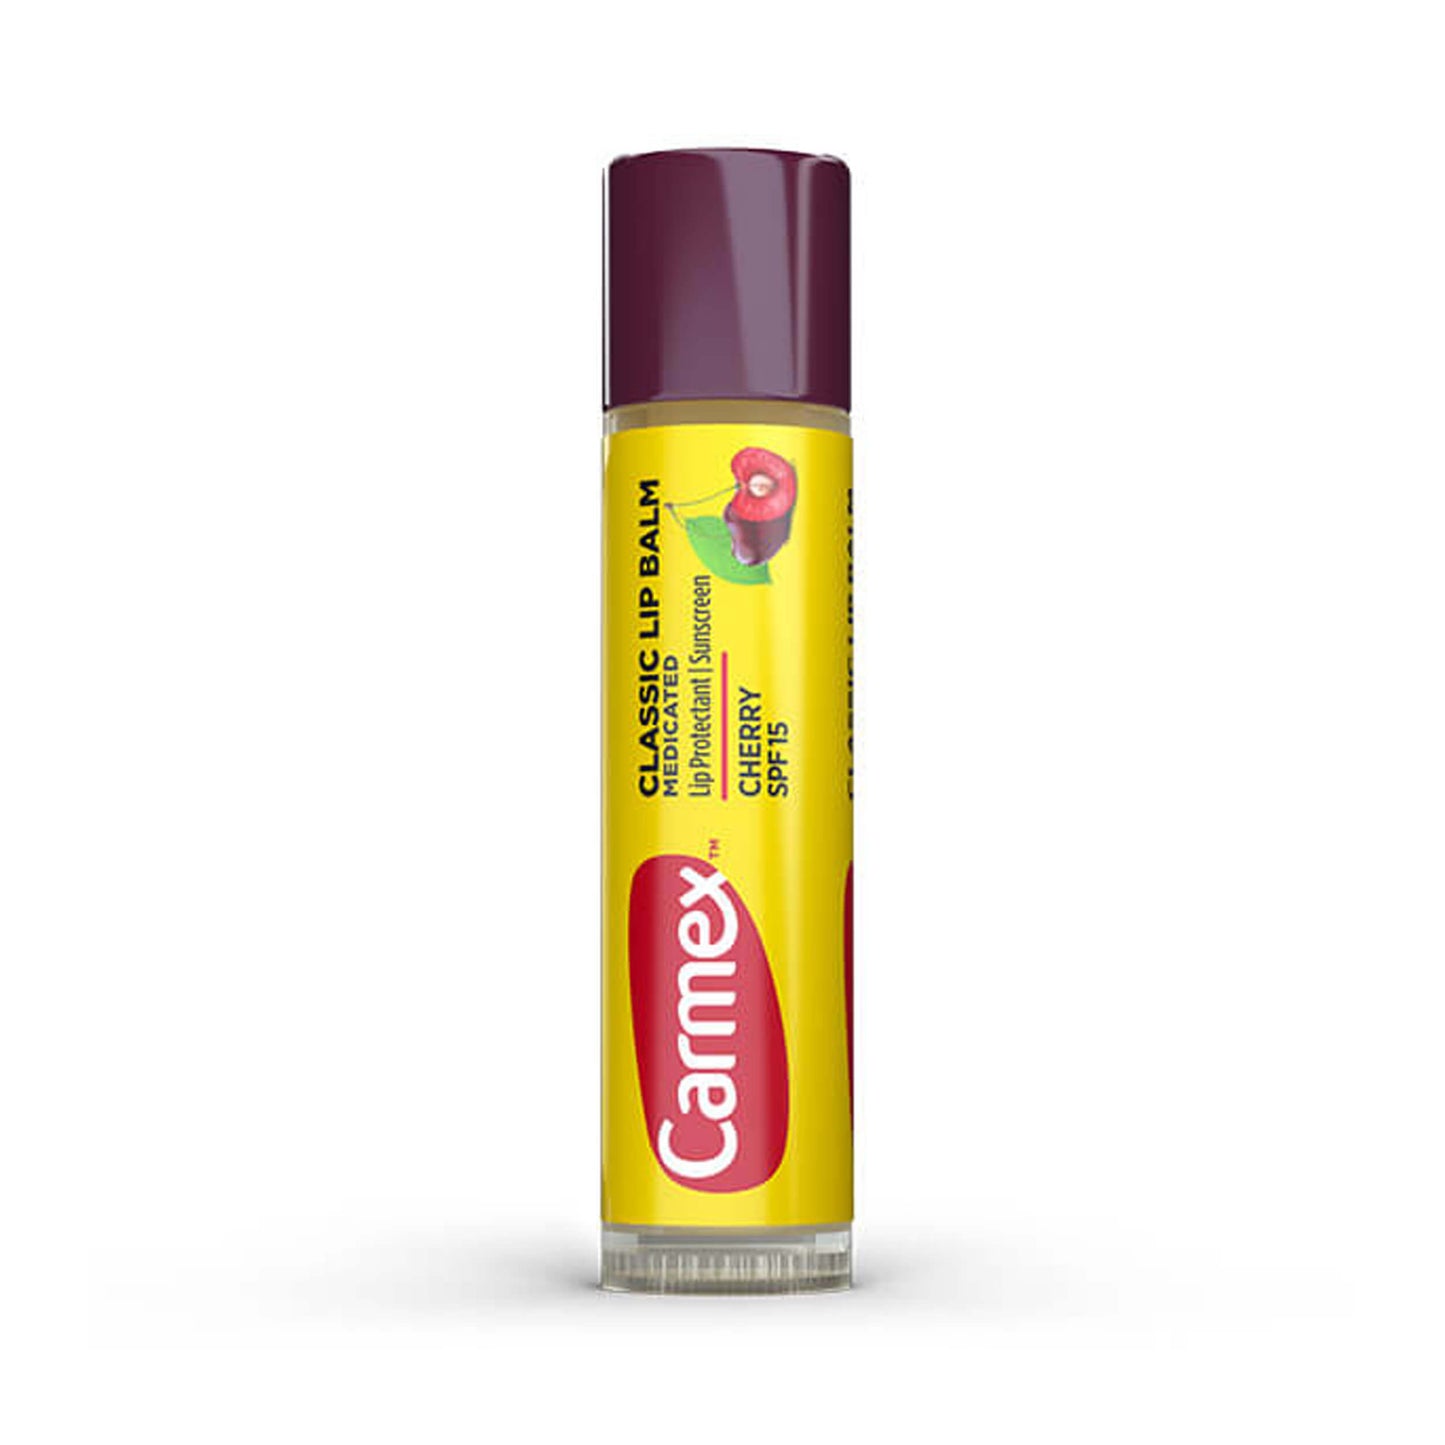 Carmex Classic Lip Balm Medicated SPF 15 Cherry